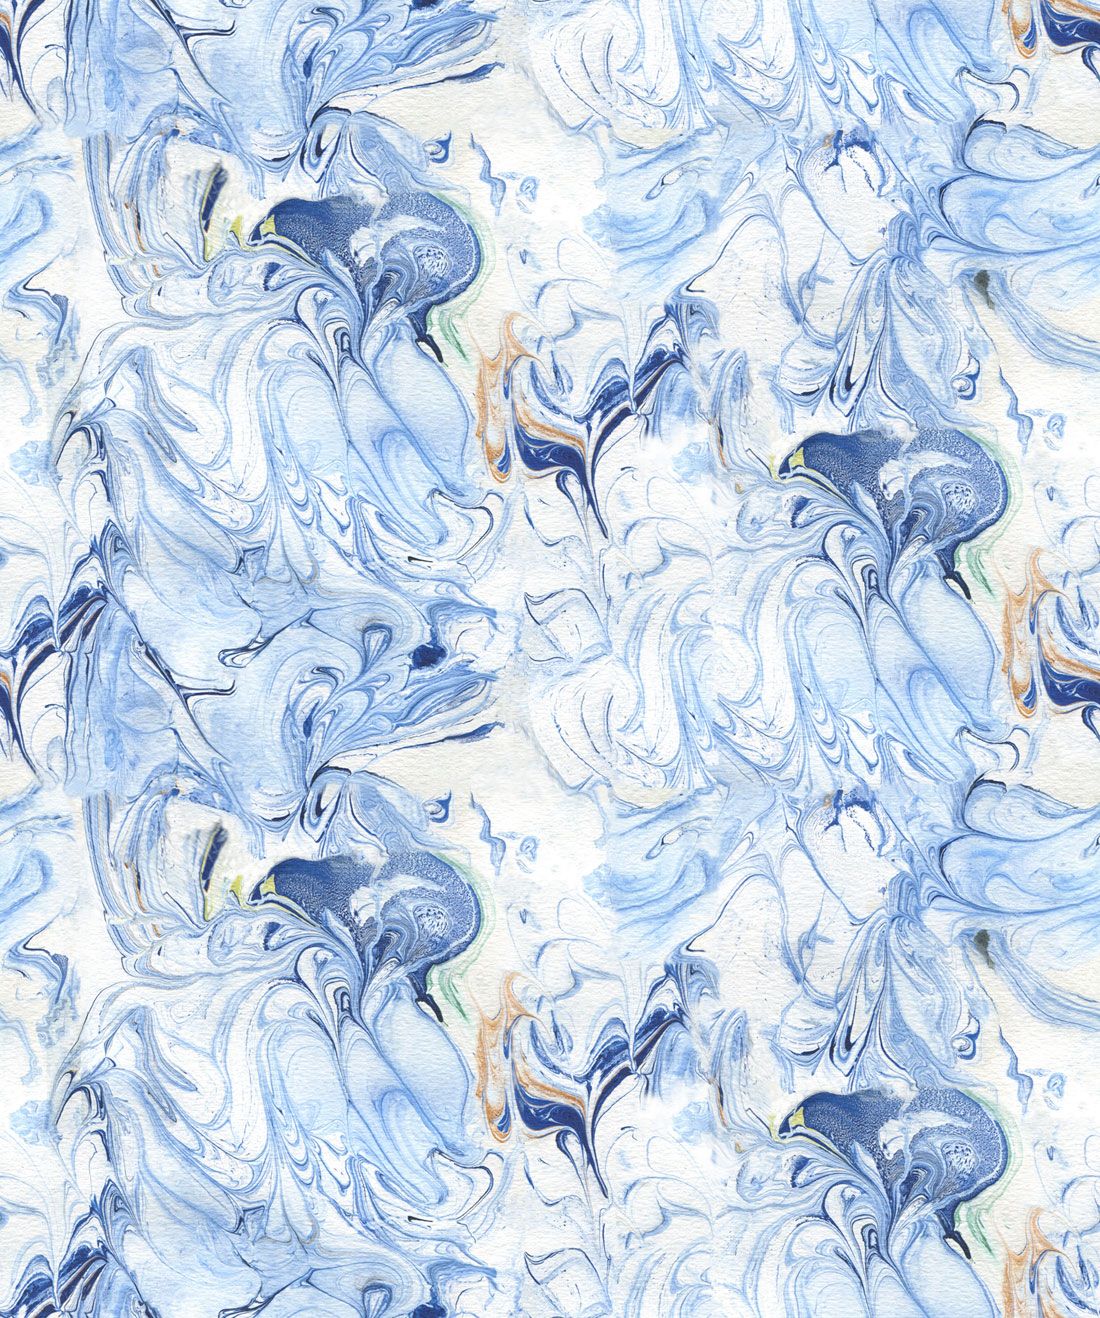 Shibori • Wallpaper of Deep Inky Tones & Tie Dye